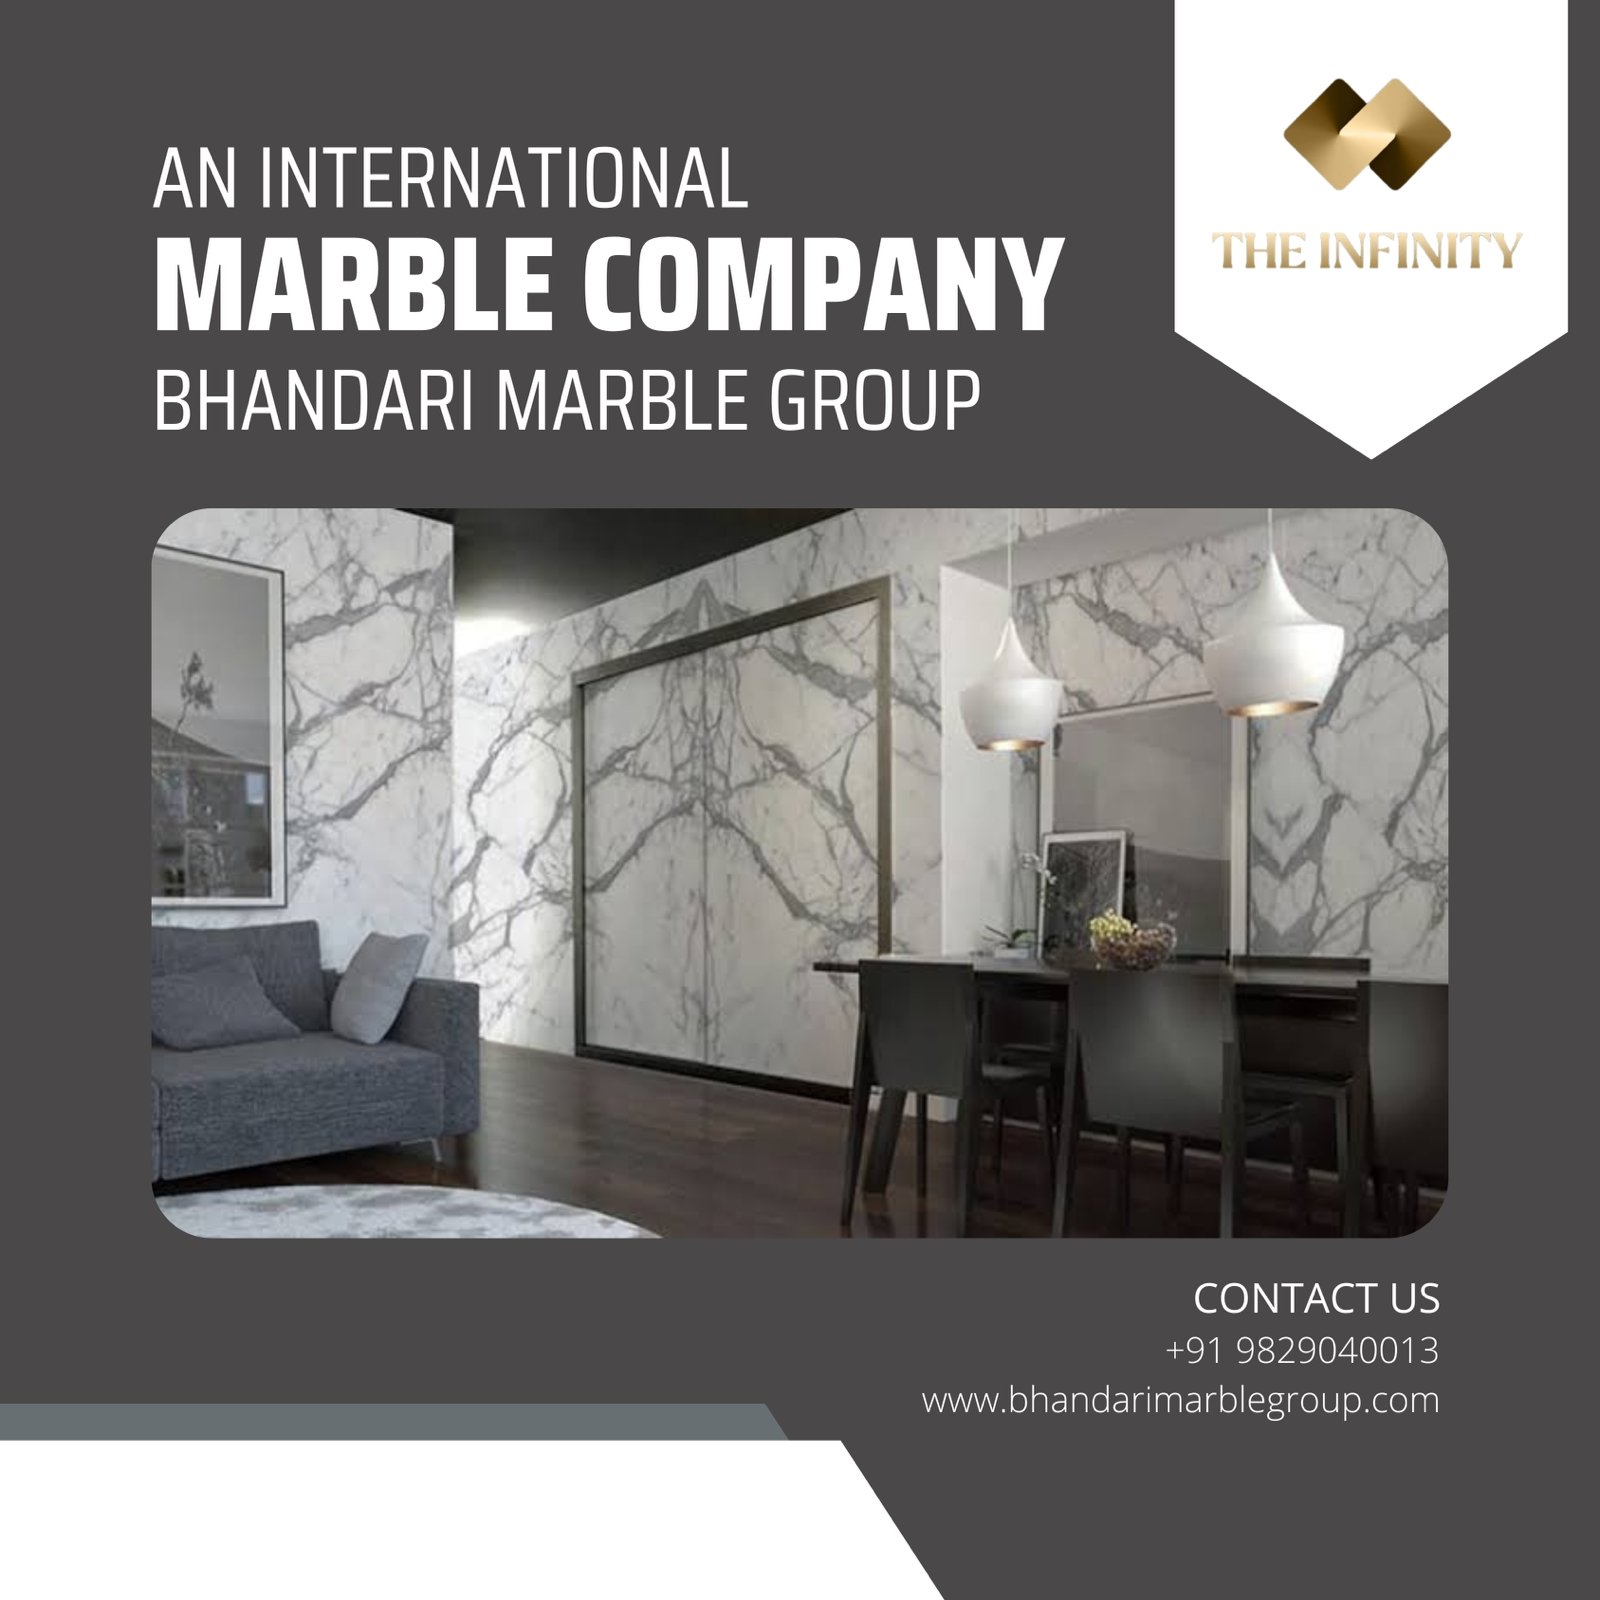 Bhandari Marble Group: International Marble Company